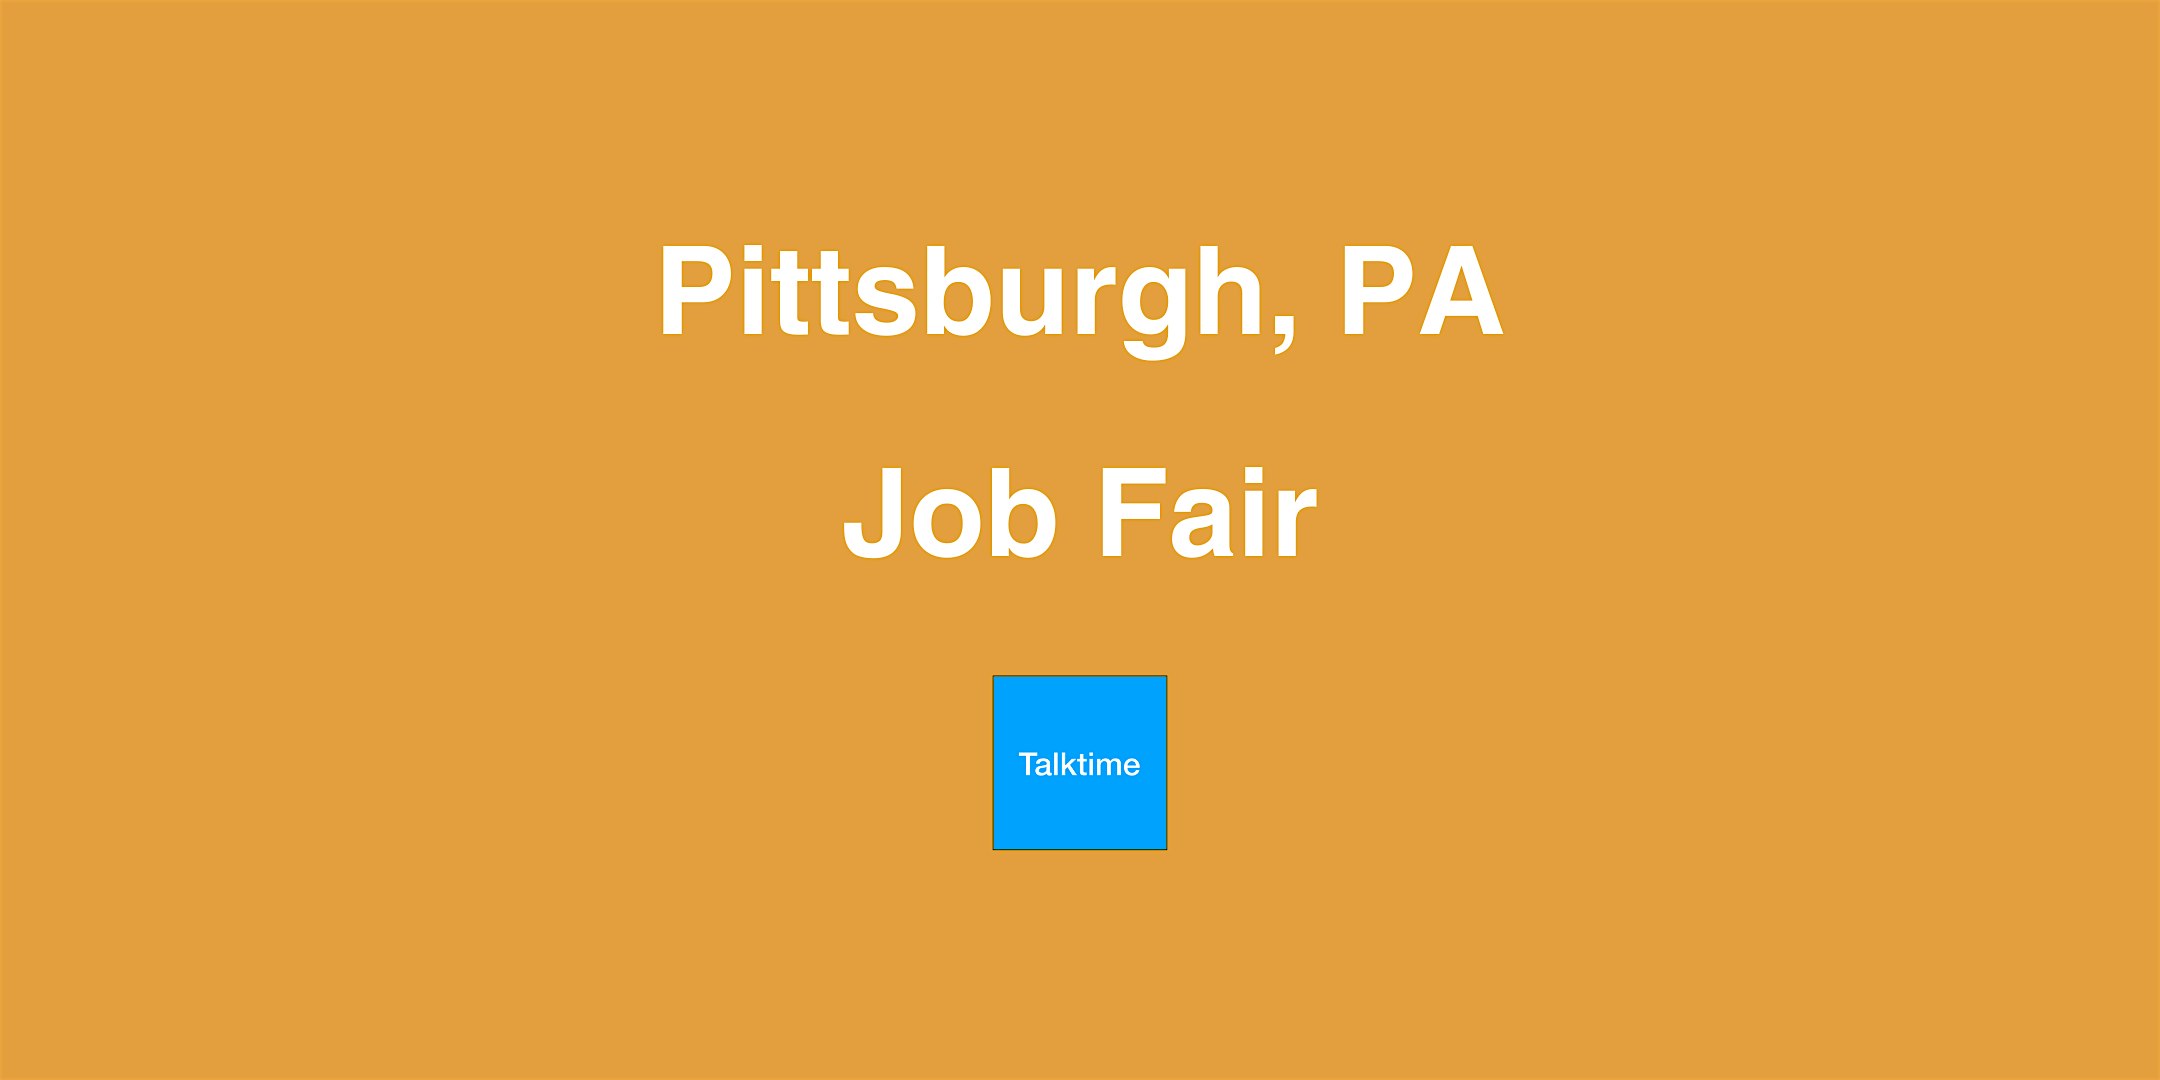 Job Fair - Pittsburgh